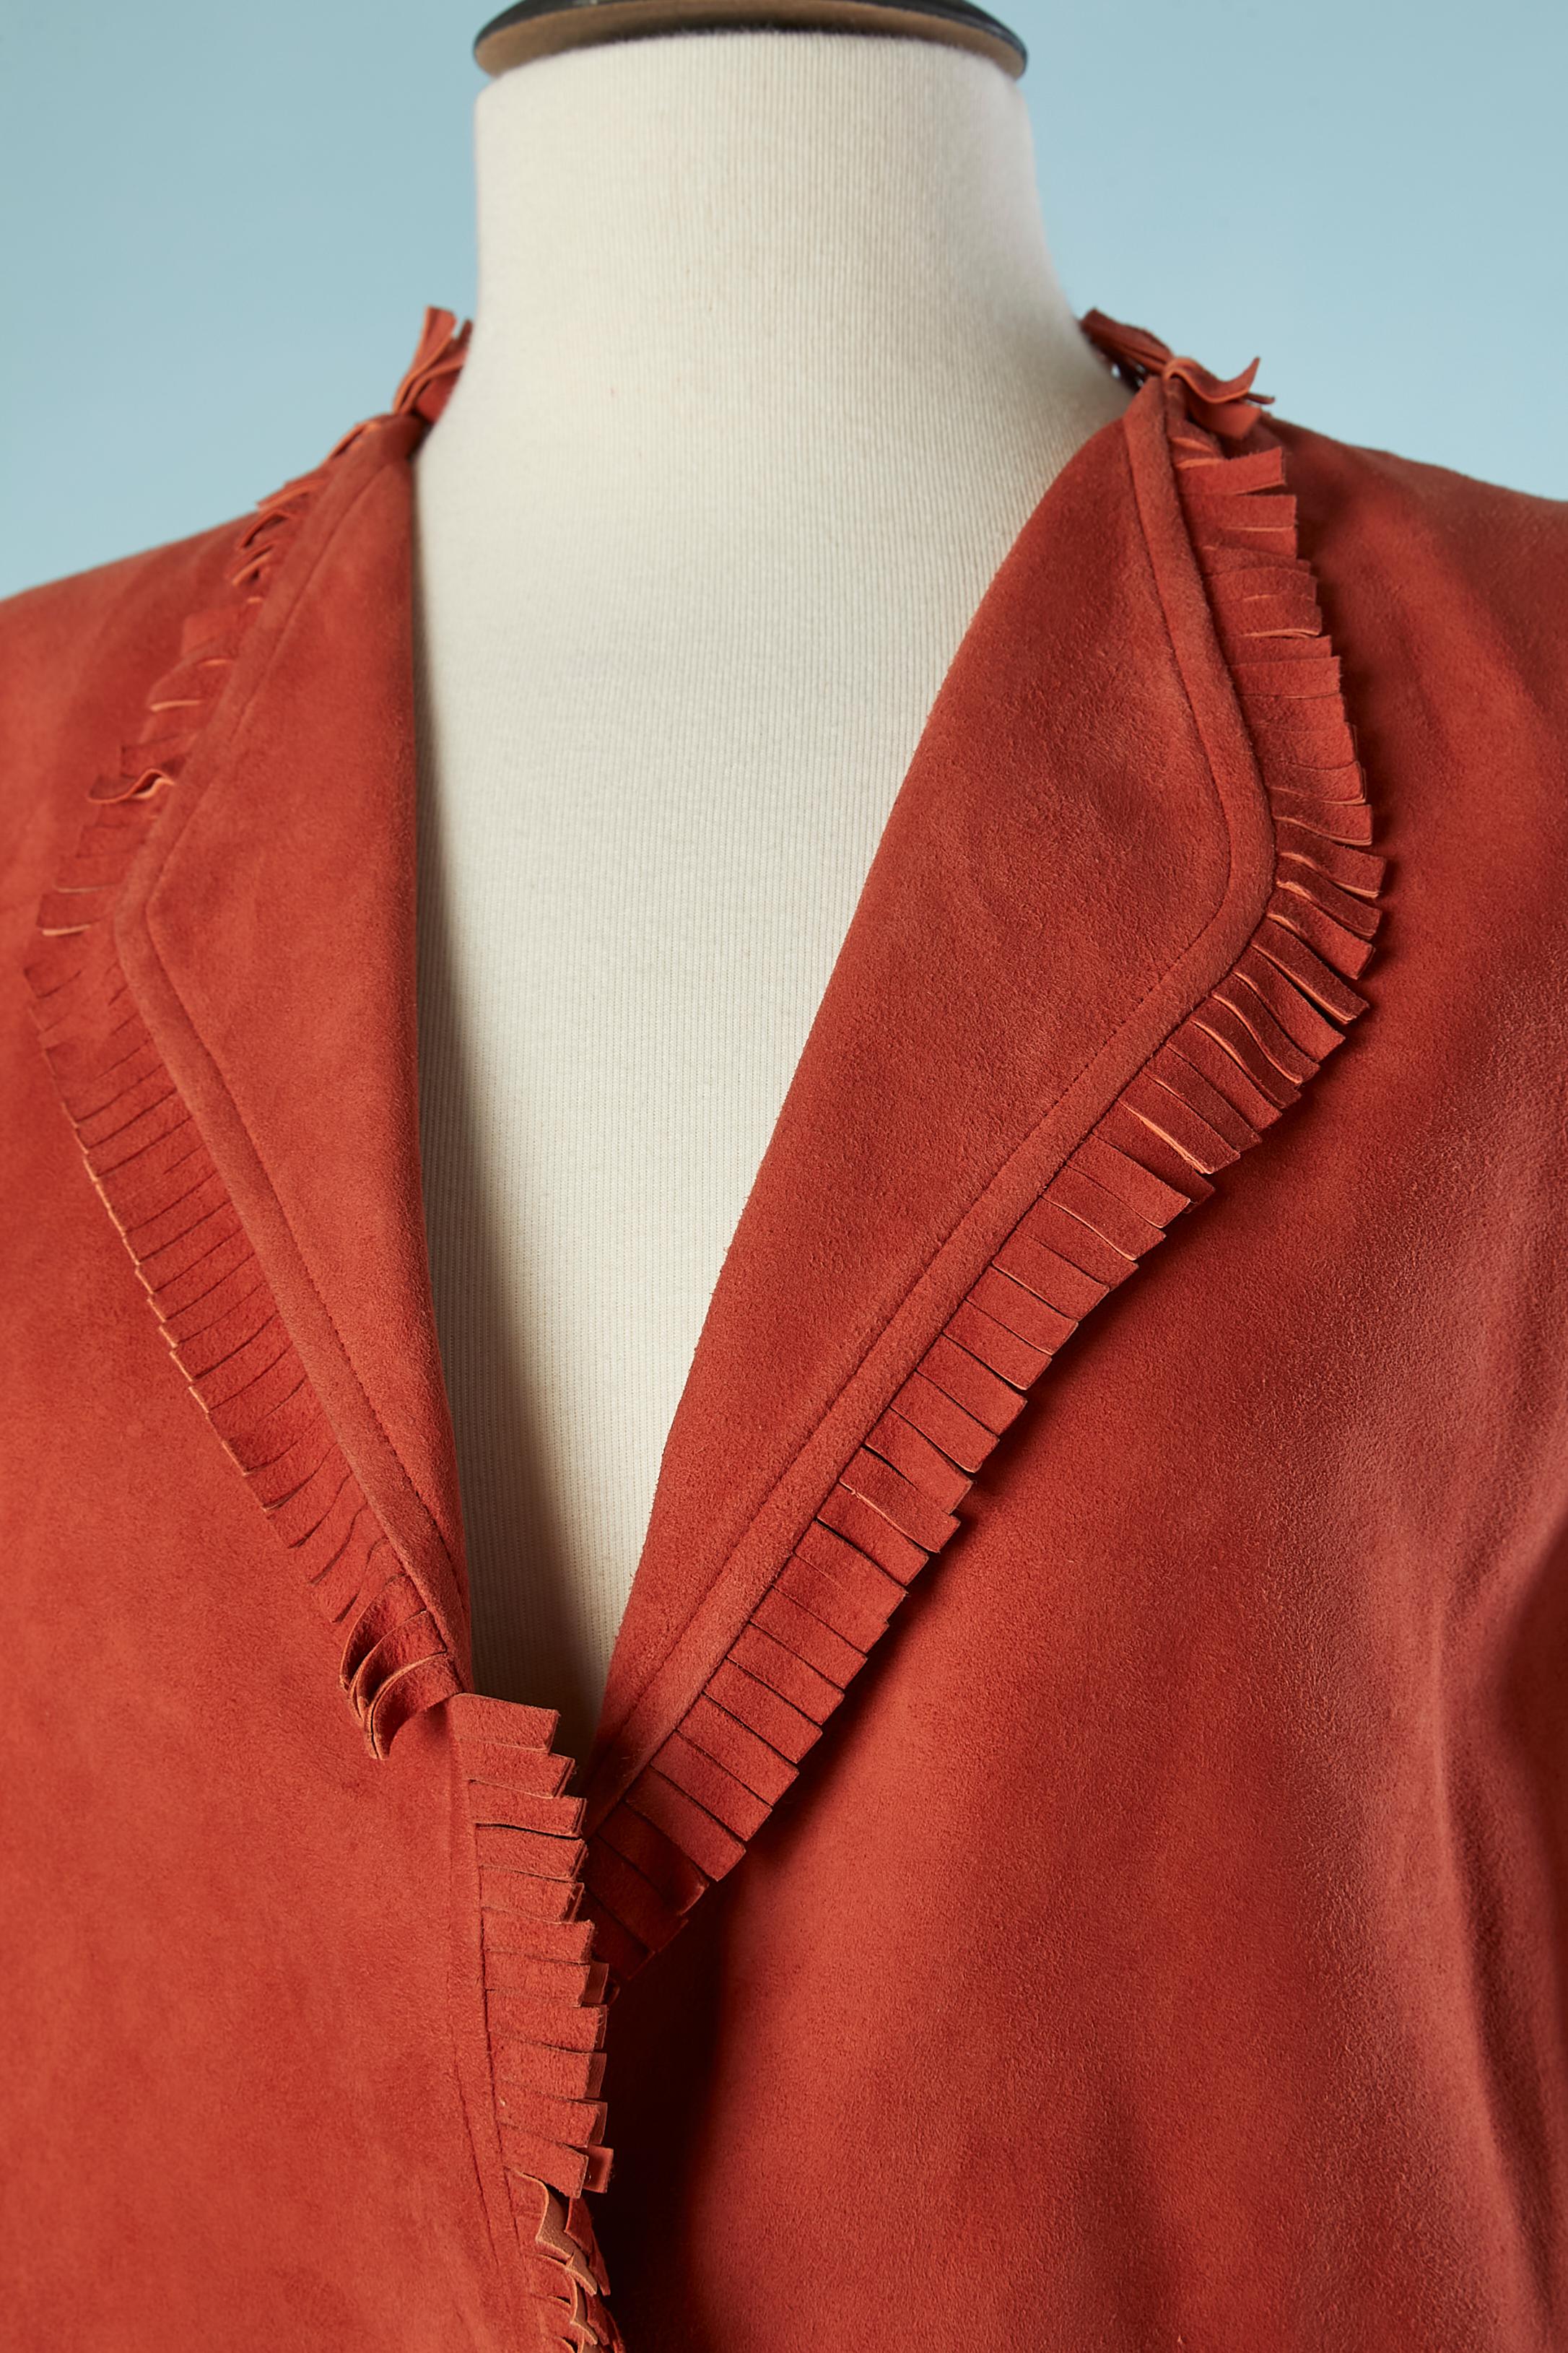 Terracotta velvet lamb suede jacket with fringes edge. Acetate lining. Shoulder pads.
SIZE 36 ( M) 